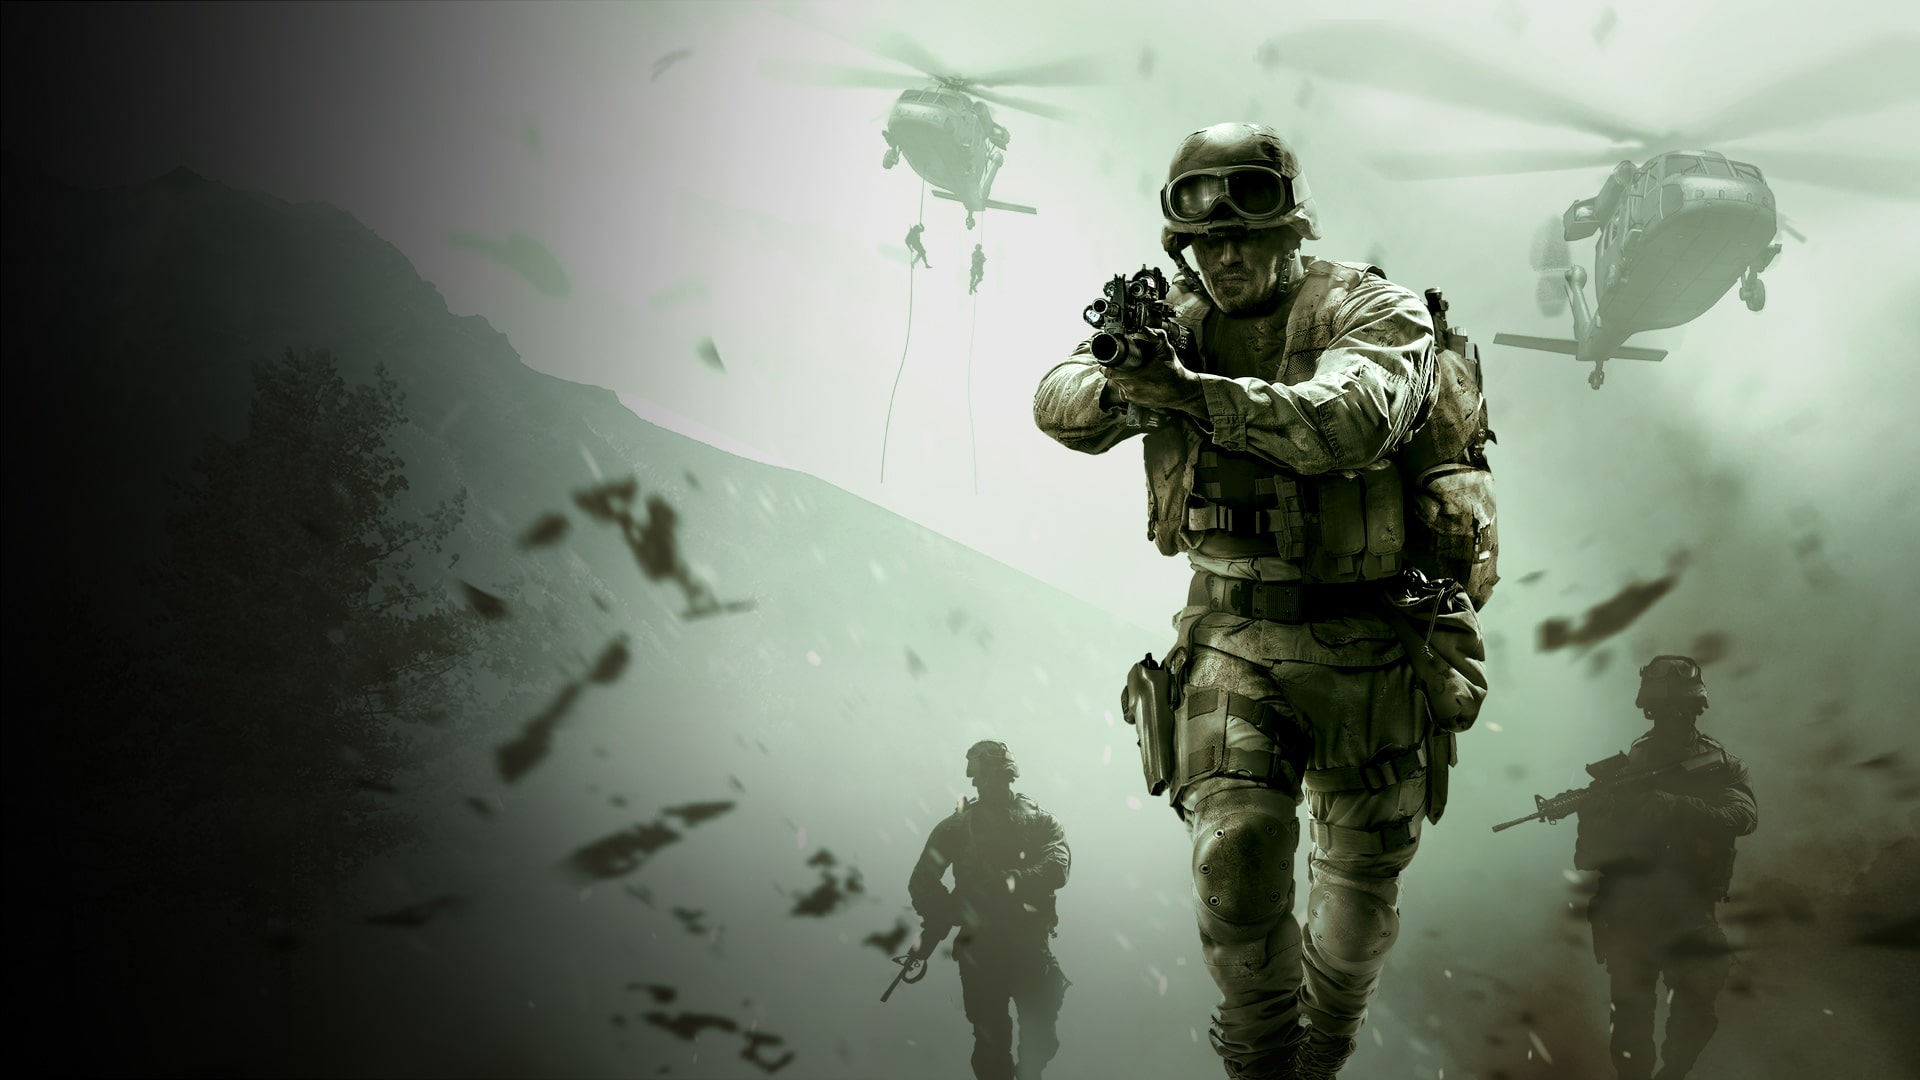 Call of Duty®: Modern Warfare® Remastered (英文版)